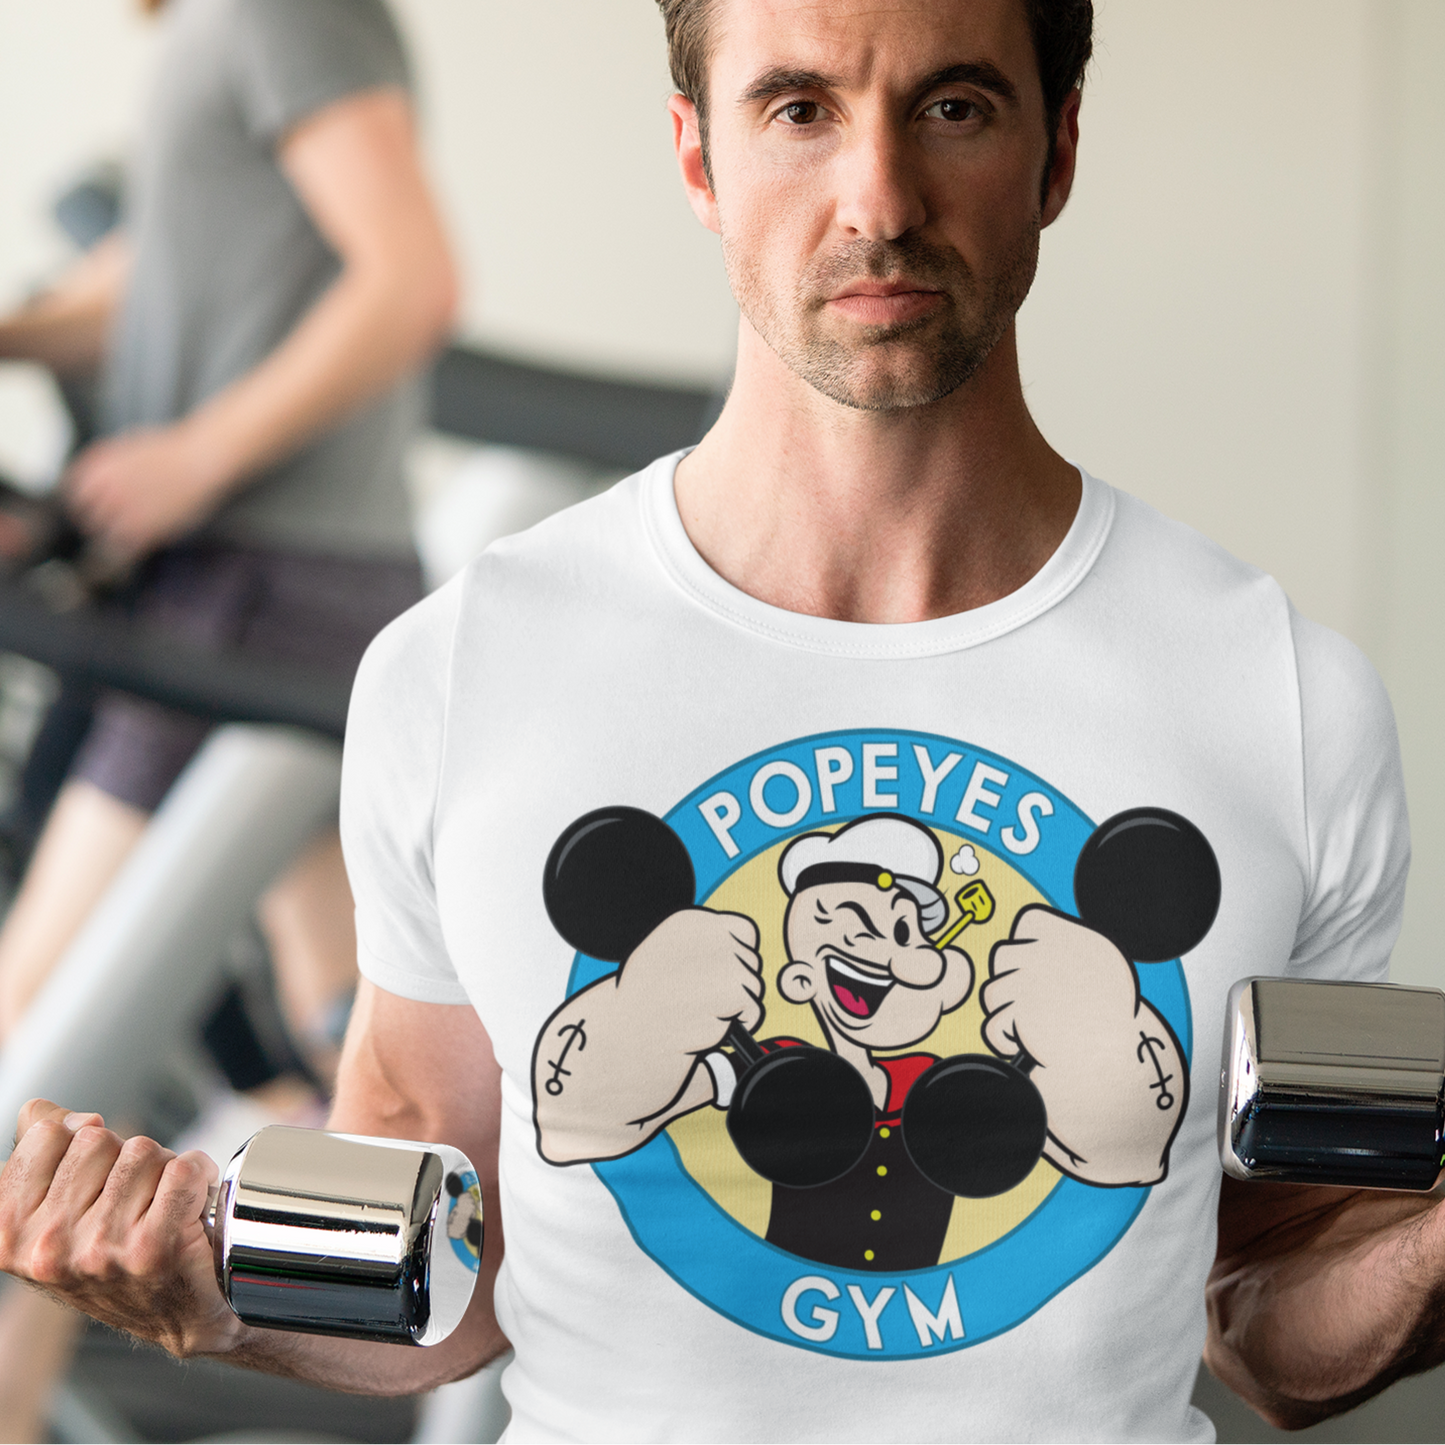 Popeyes Funny Gym Shirt, Workout Fitness Shirt, Motivational Shirt, Must have Gym Shirt, Inspirational Workout Shirt